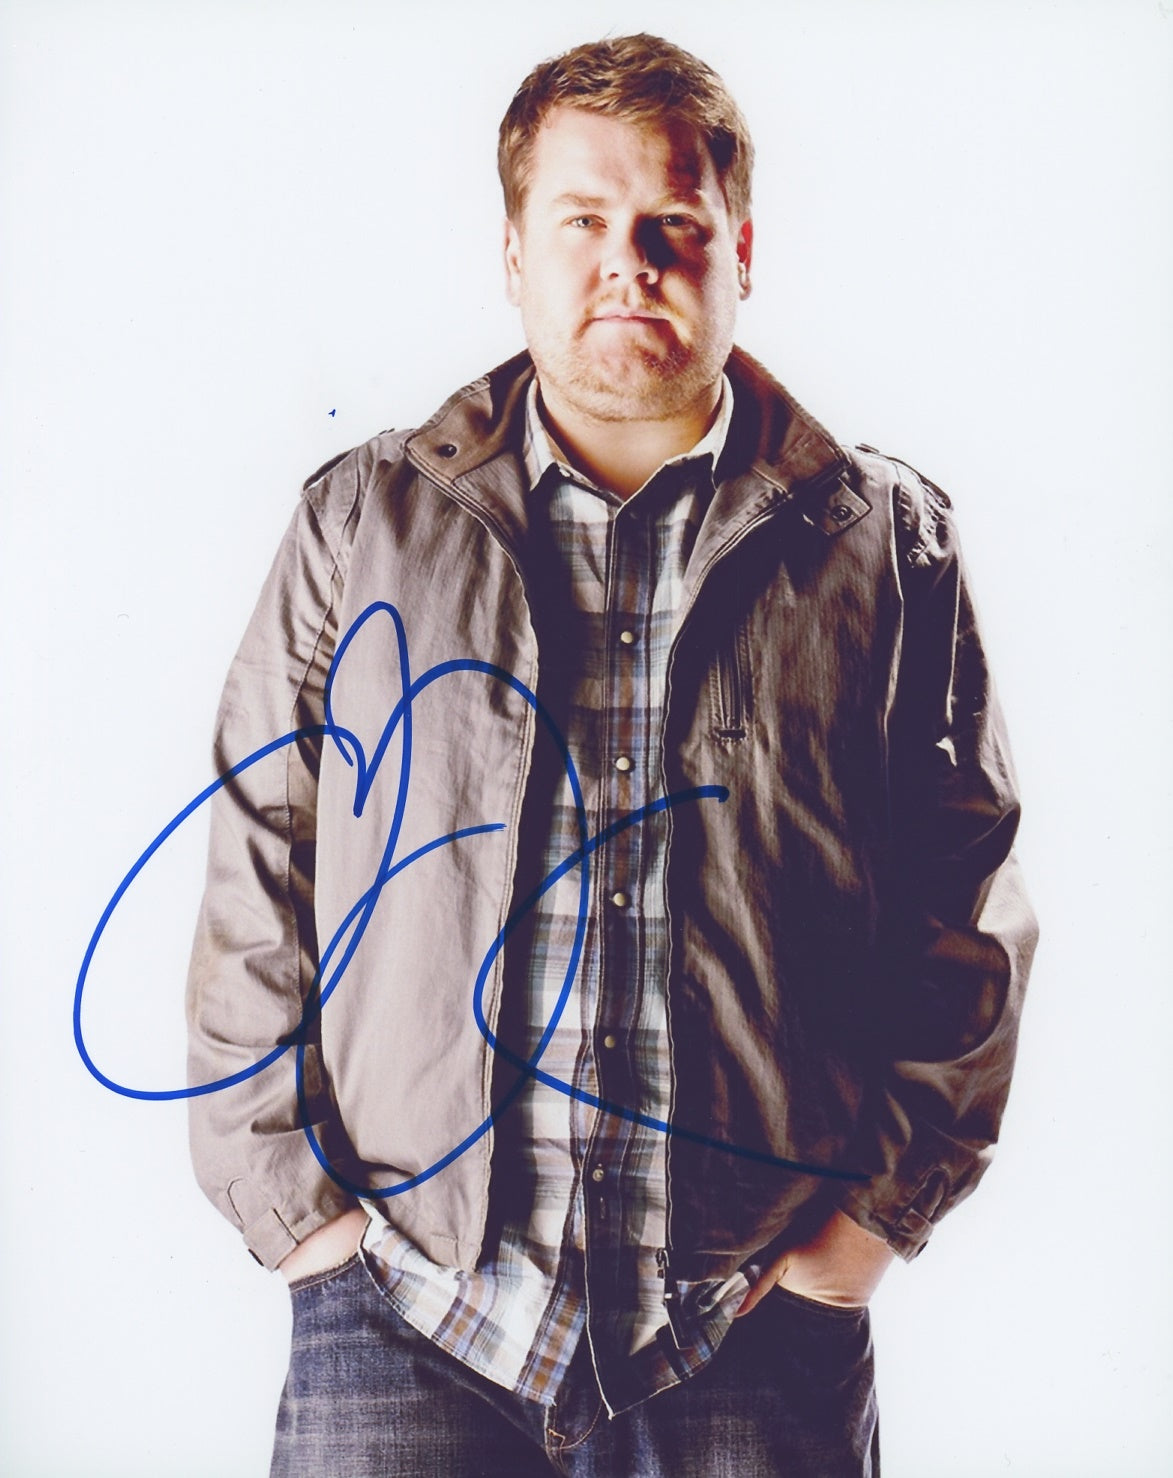 James Corden Signed 8x10 Photo